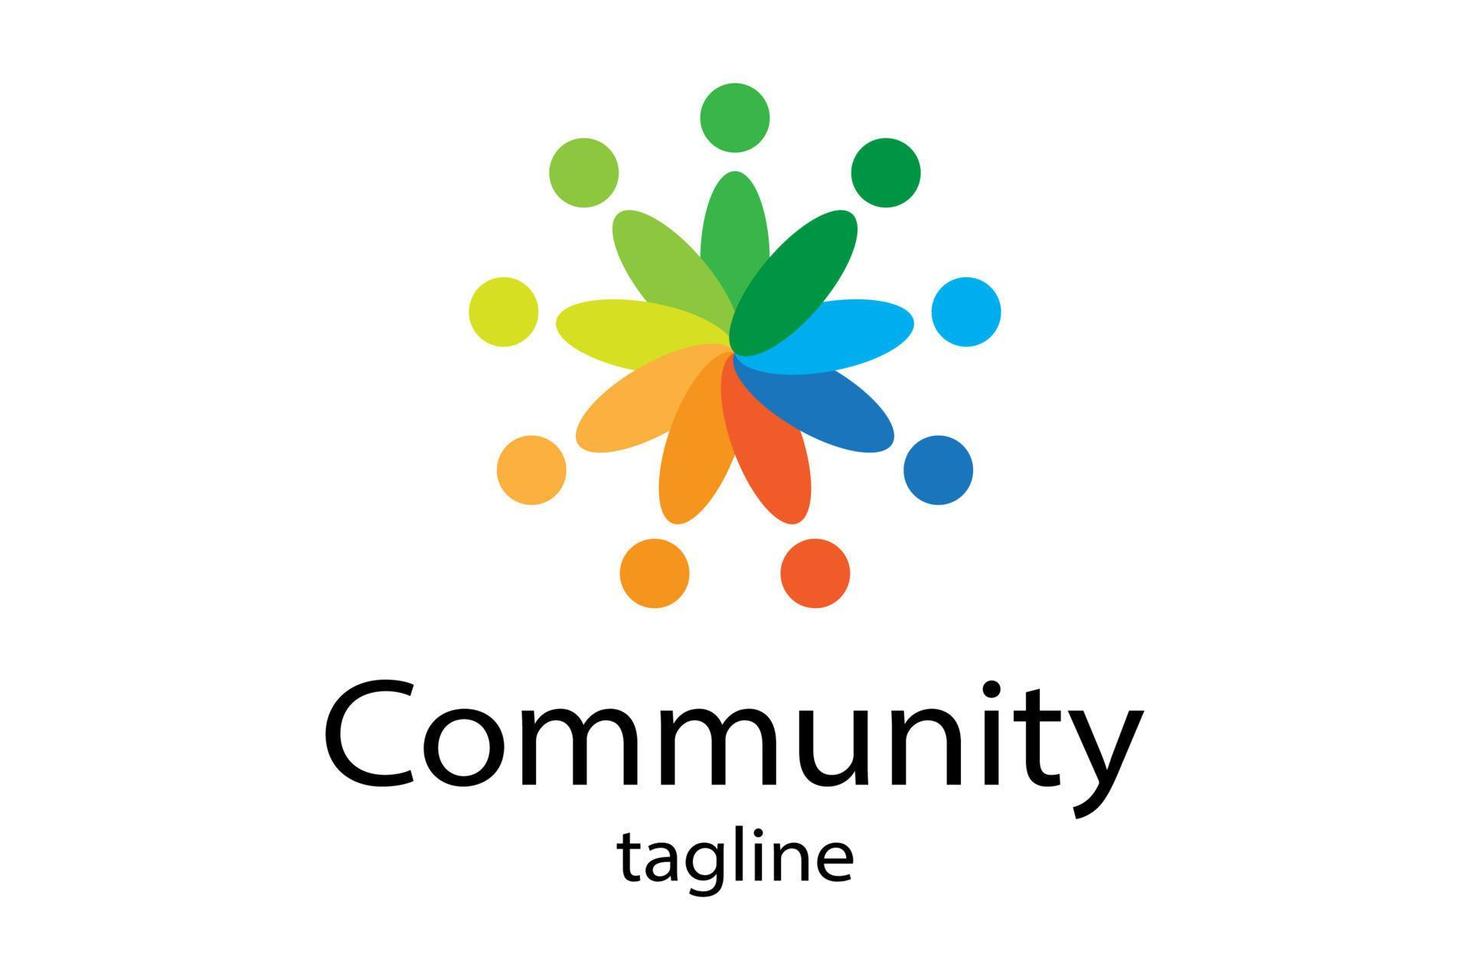 Community-Logo-Icon-Design vektor